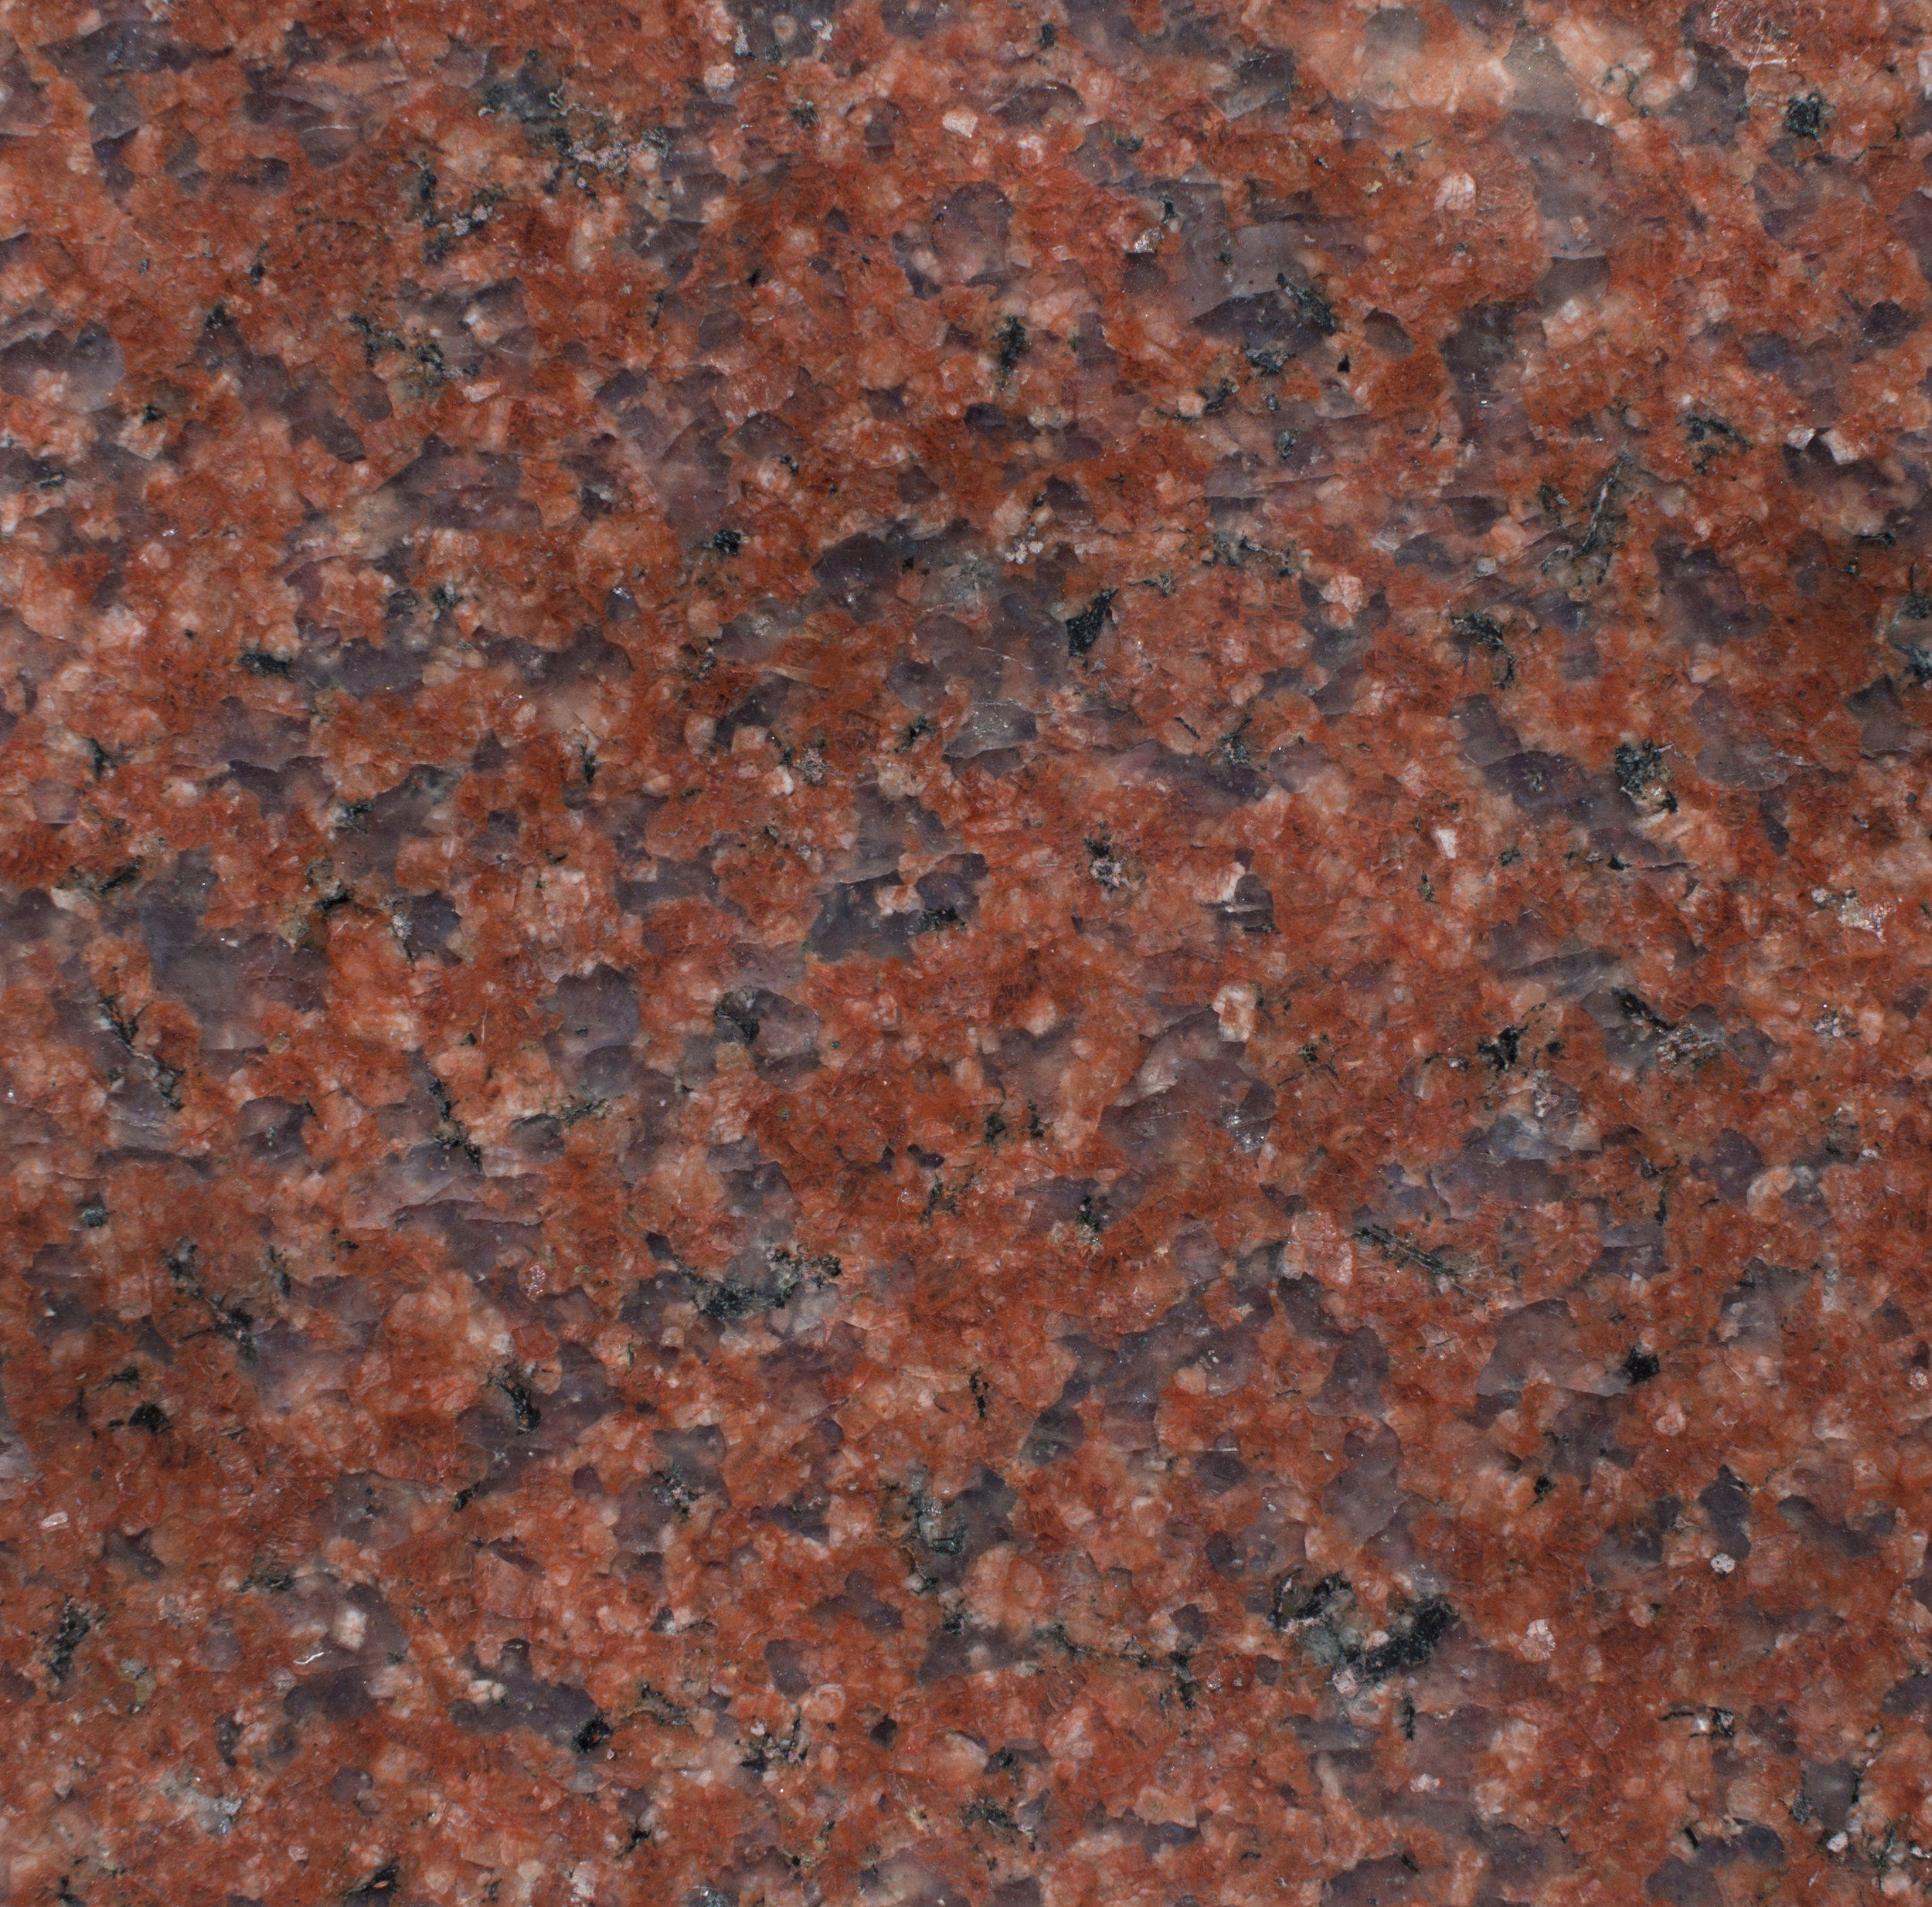 India Red Granite